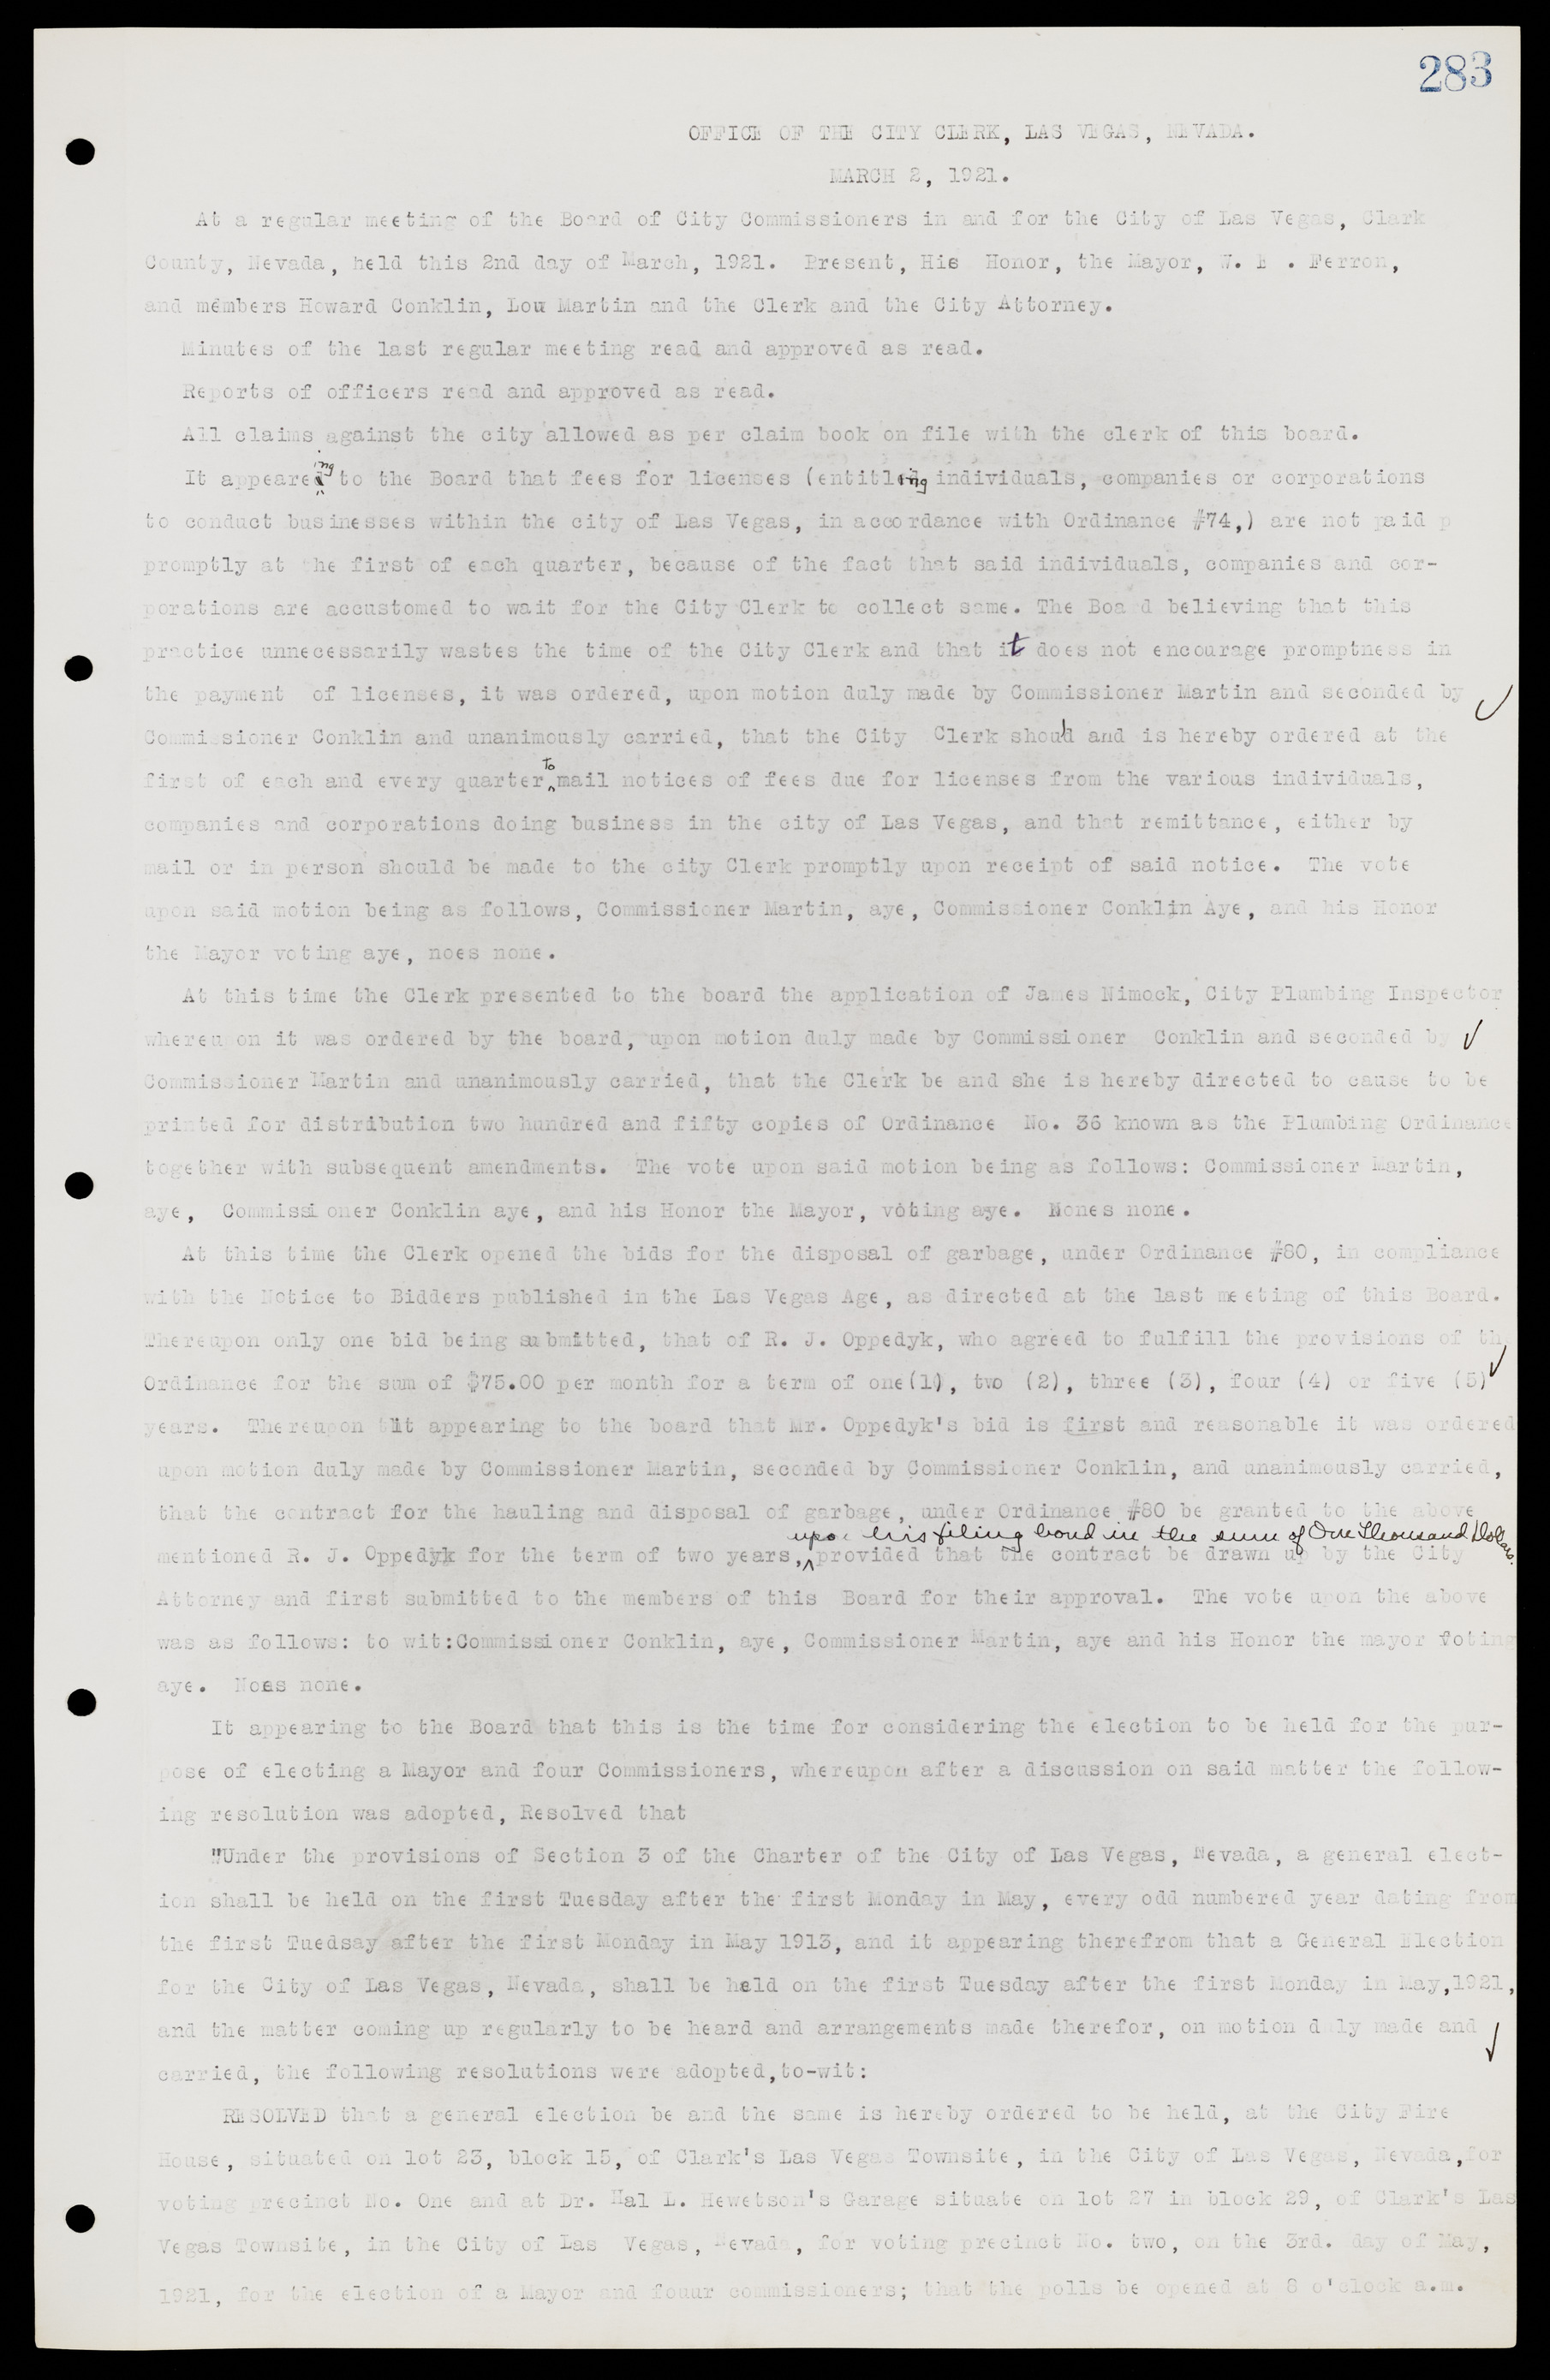 Las Vegas City Commission Minutes, June 22, 1911 to February 7, 1922, lvc000001-299